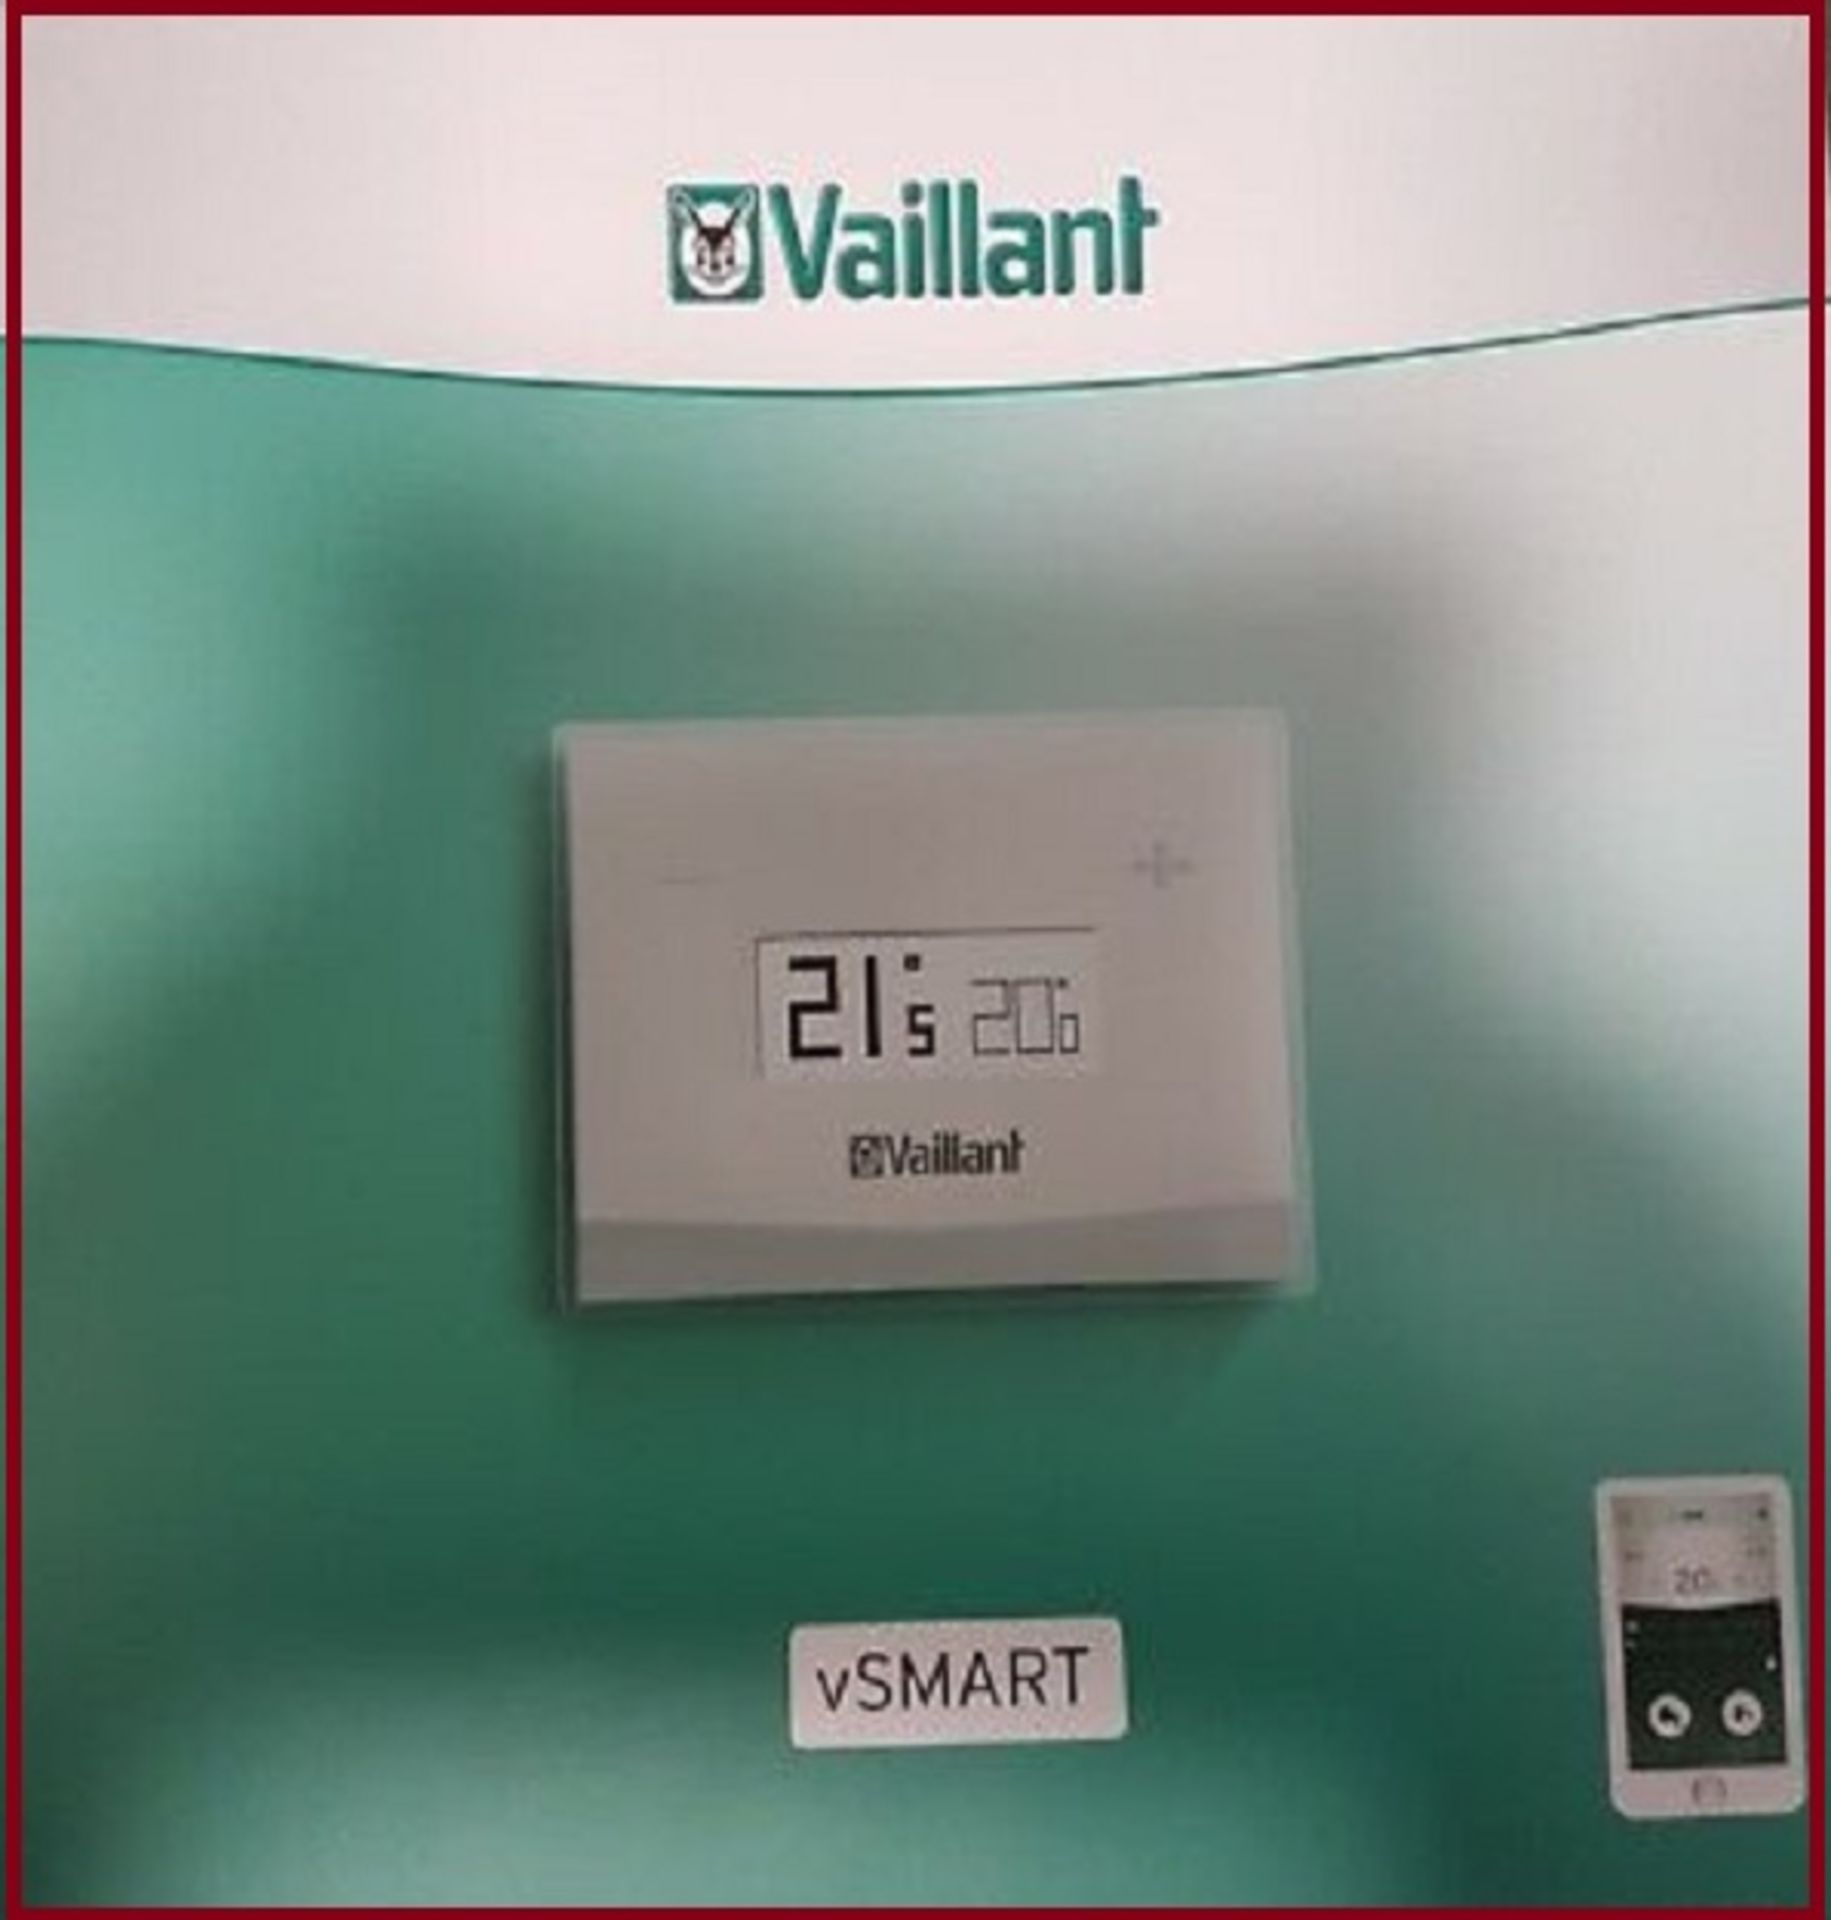 Vaillant vSMART Internet Room Thermostat - Combi Pack